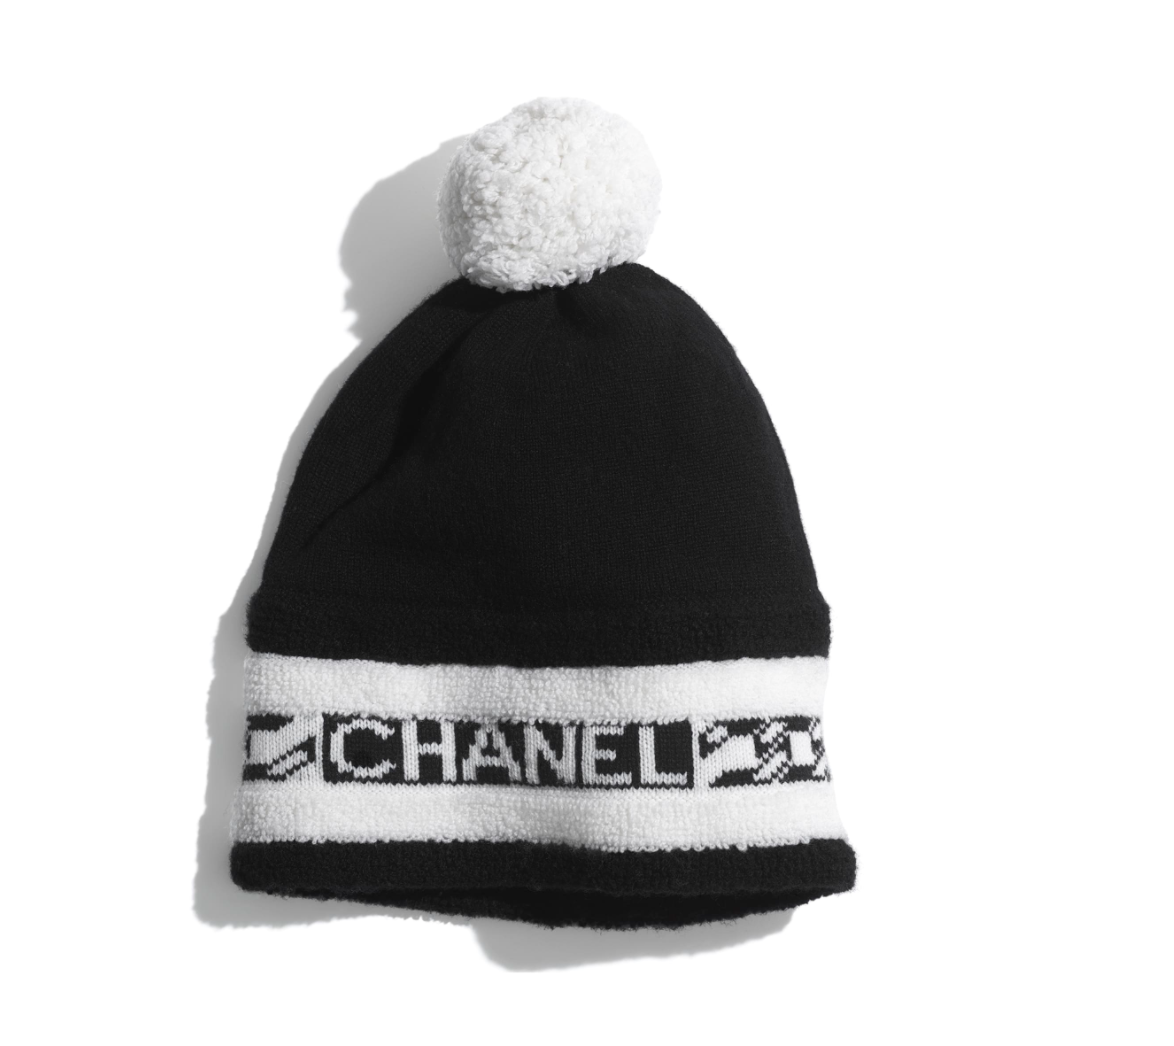 Chanel Hat, Black and White with Pom Pom, New - No Box - Julia Rose Boston  | Shop